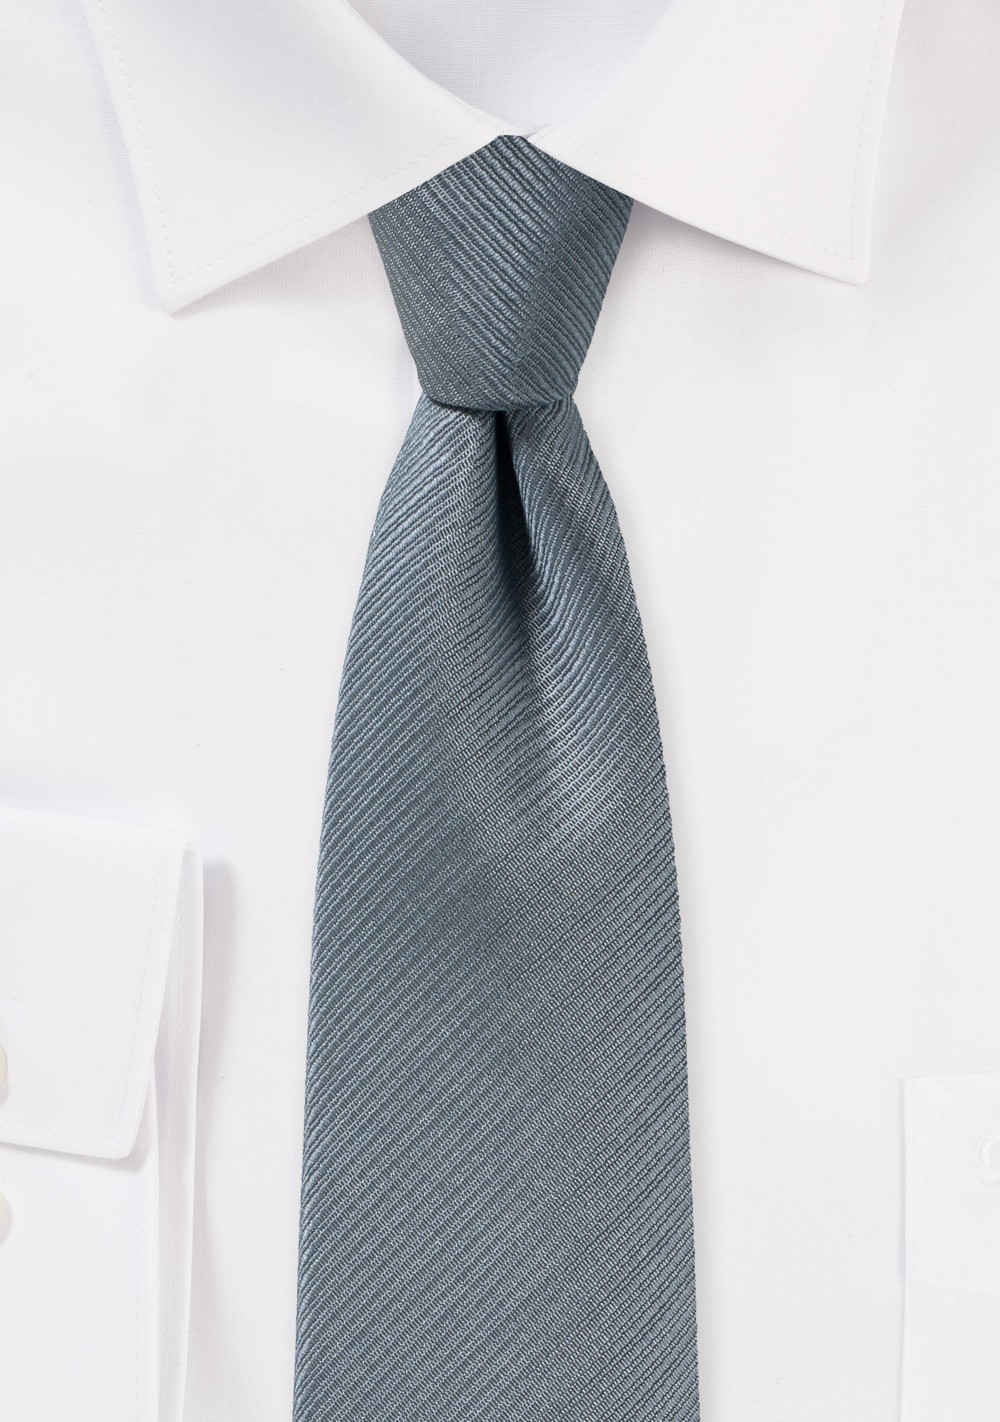 Classic Gray Textured Skinny Tie